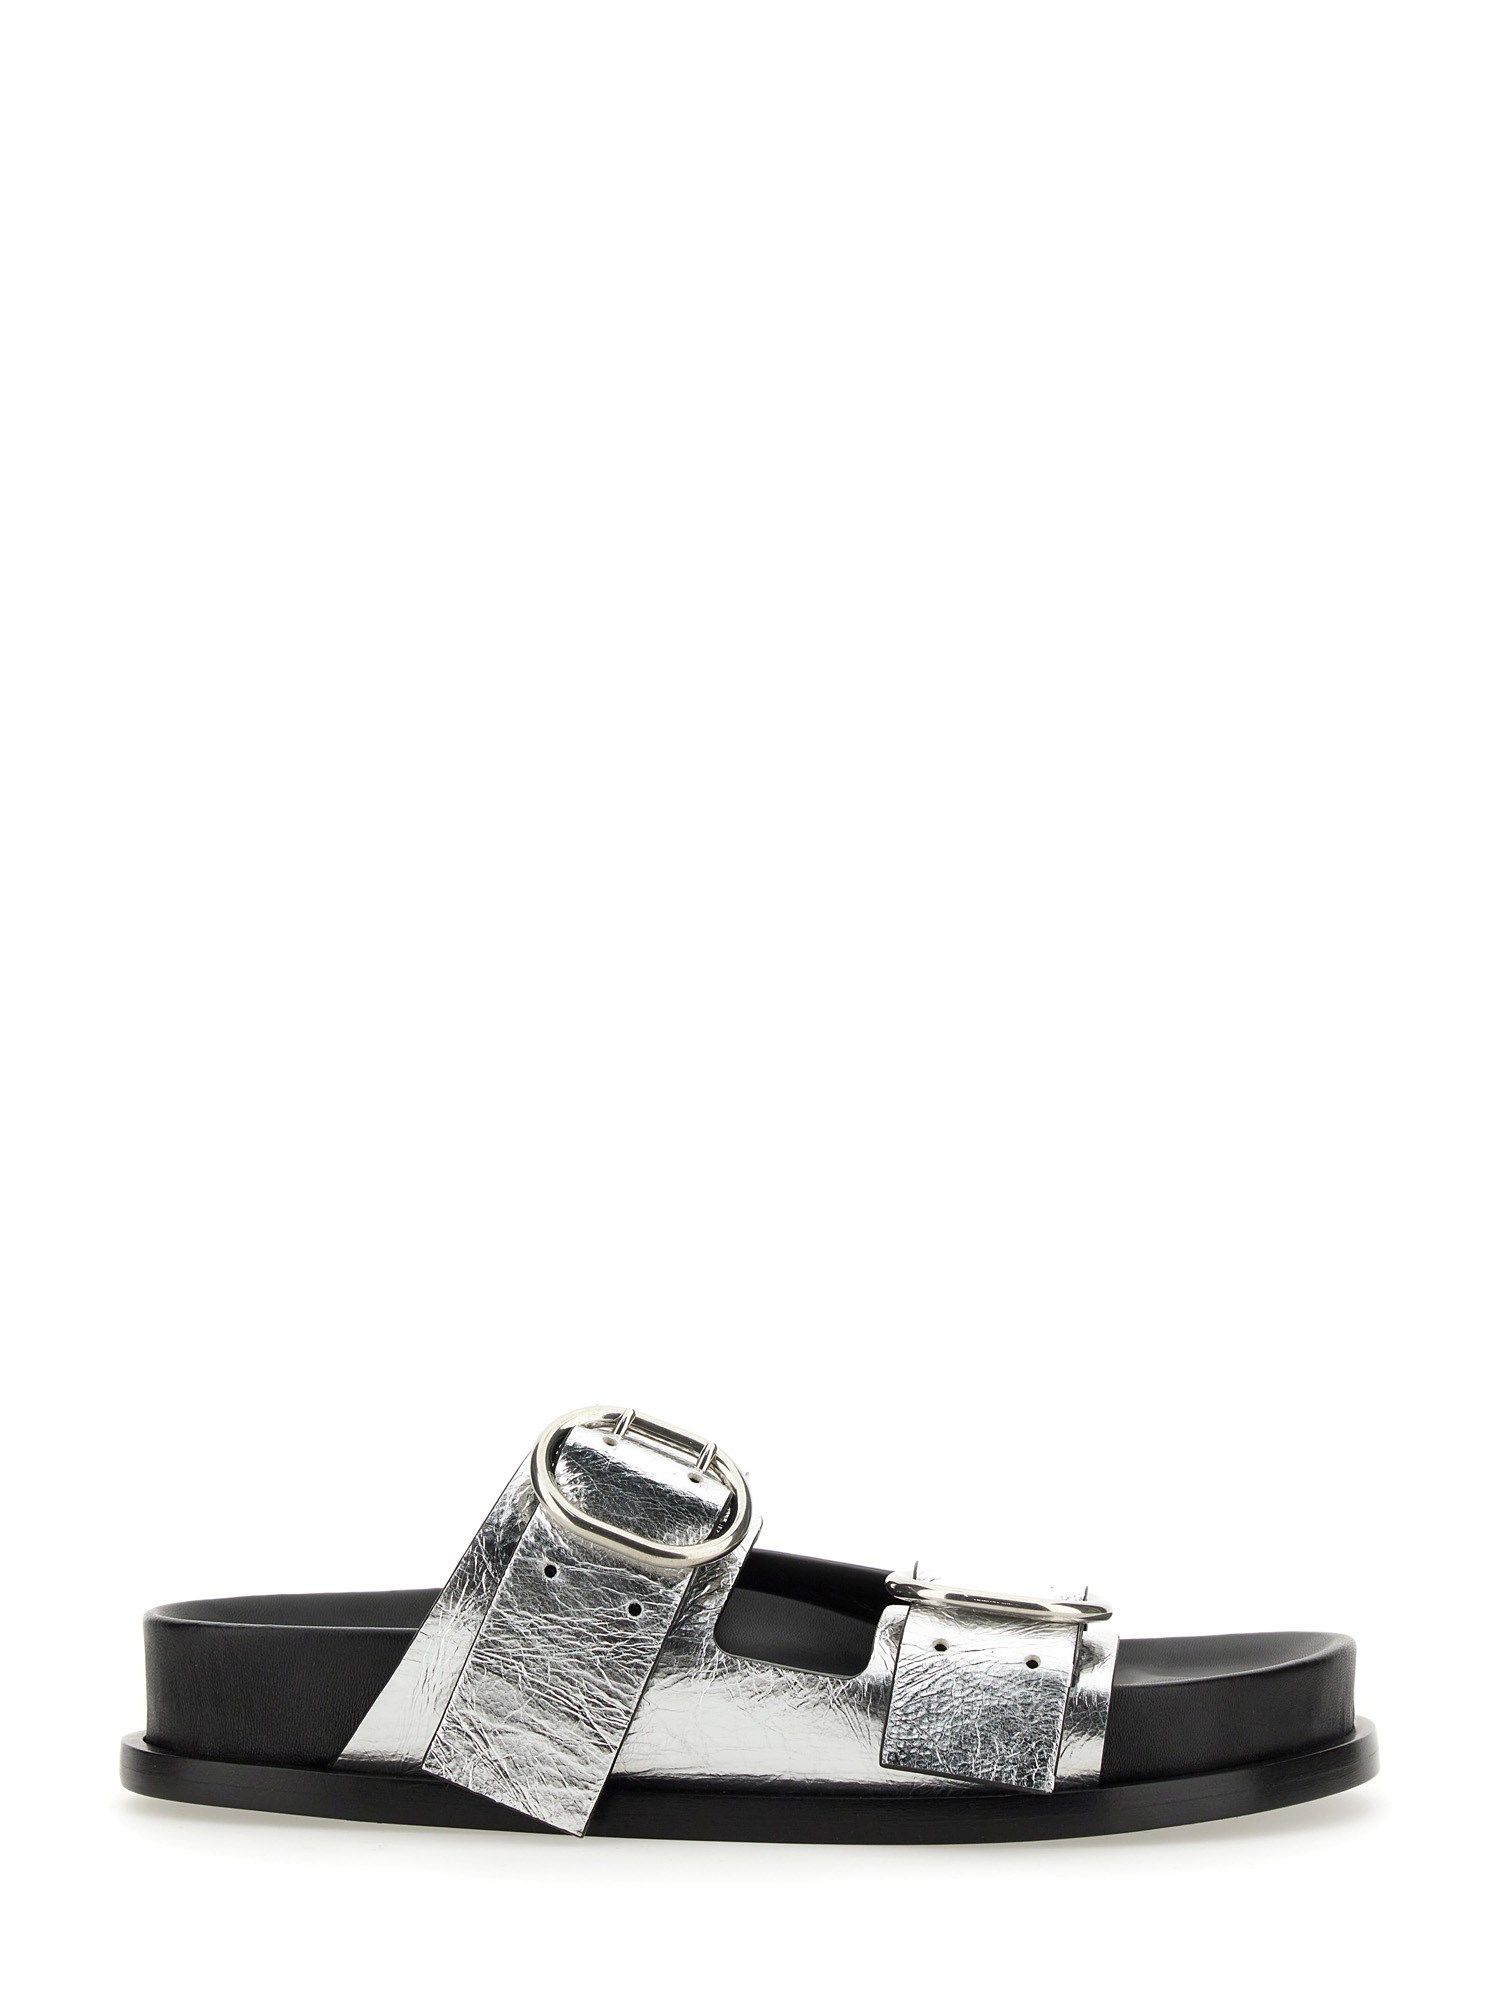 jil sander leather sandal with buckle